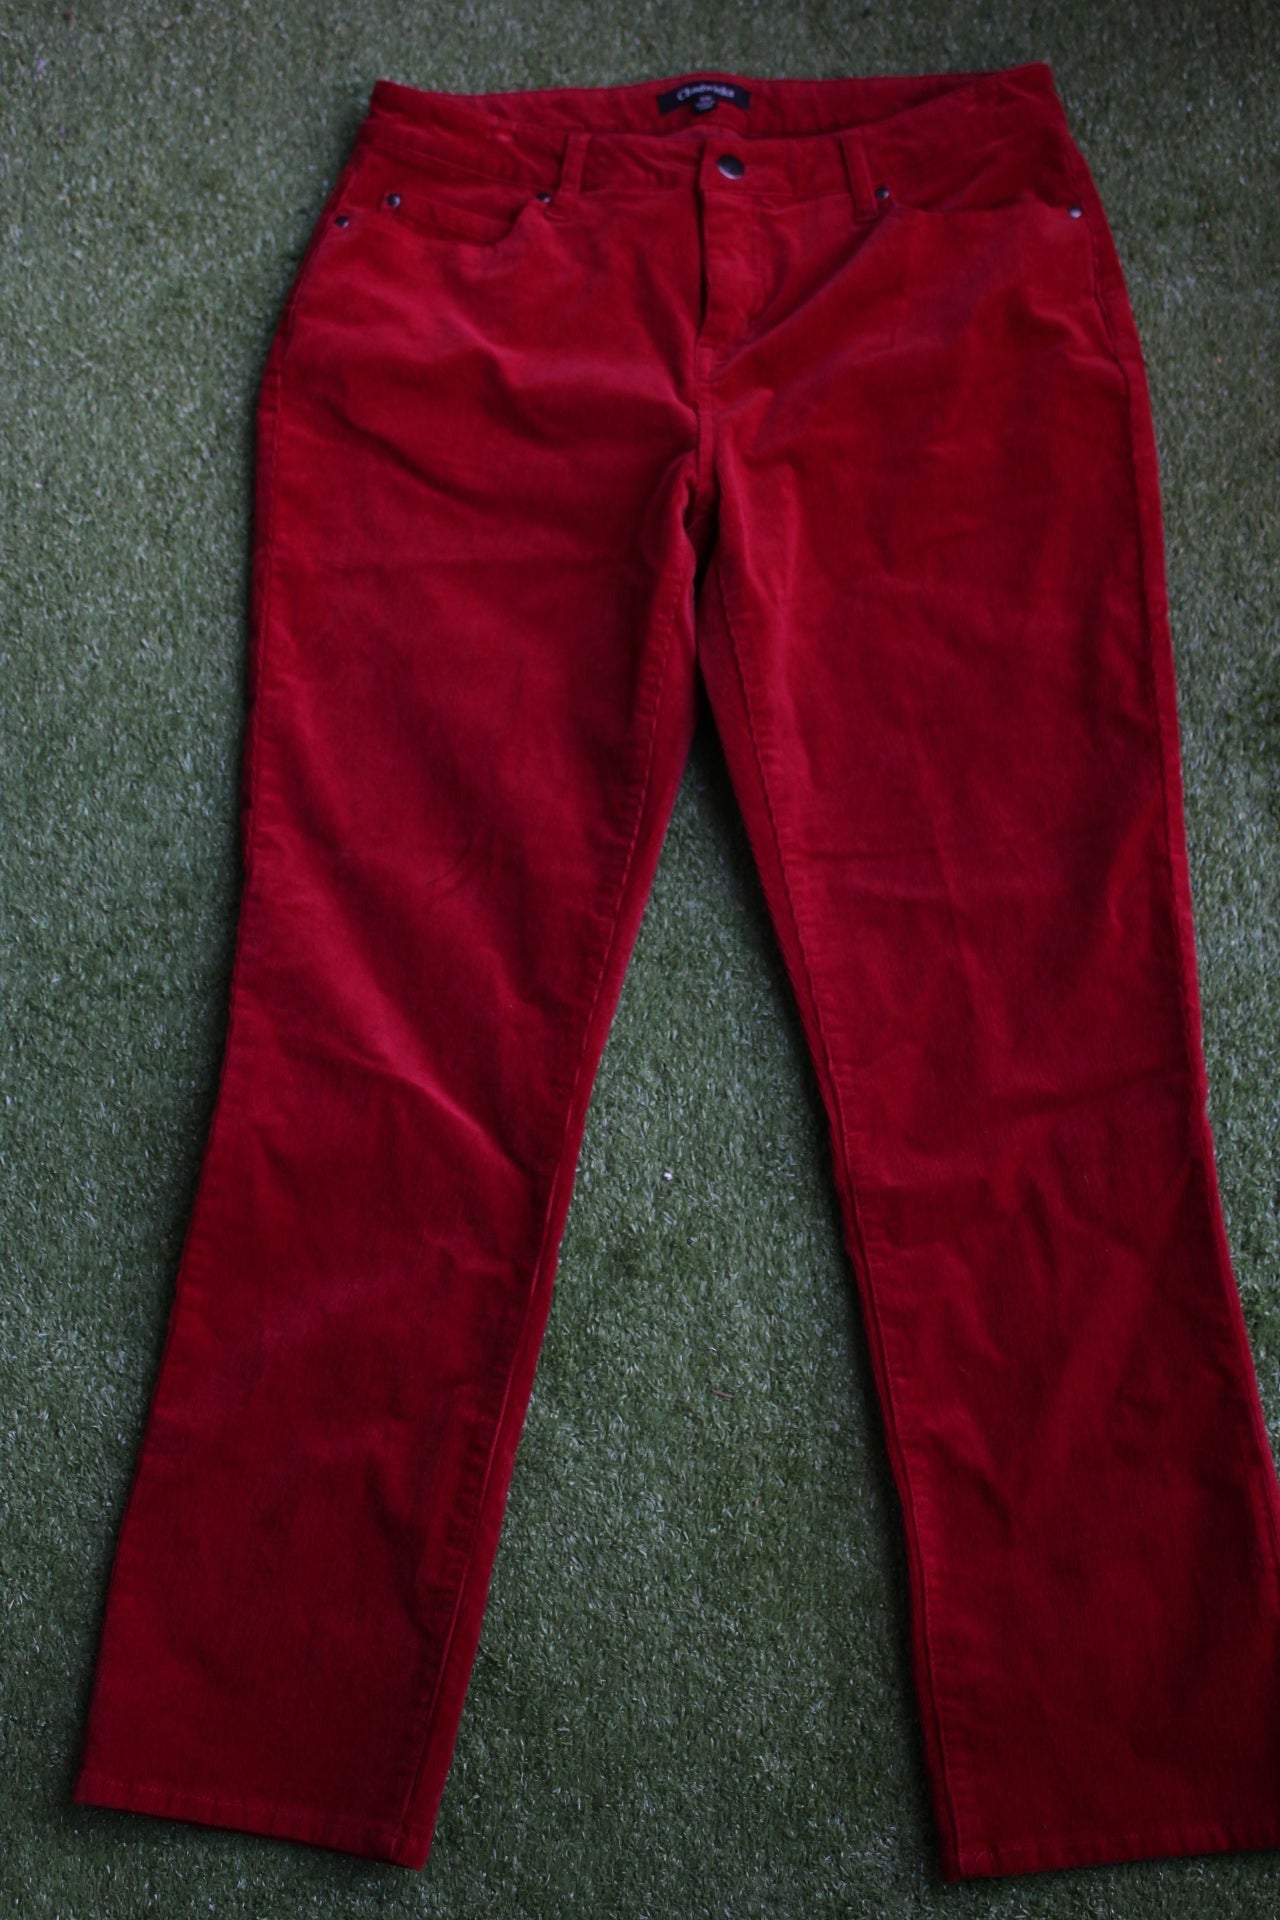 Corduroy pants (12P)